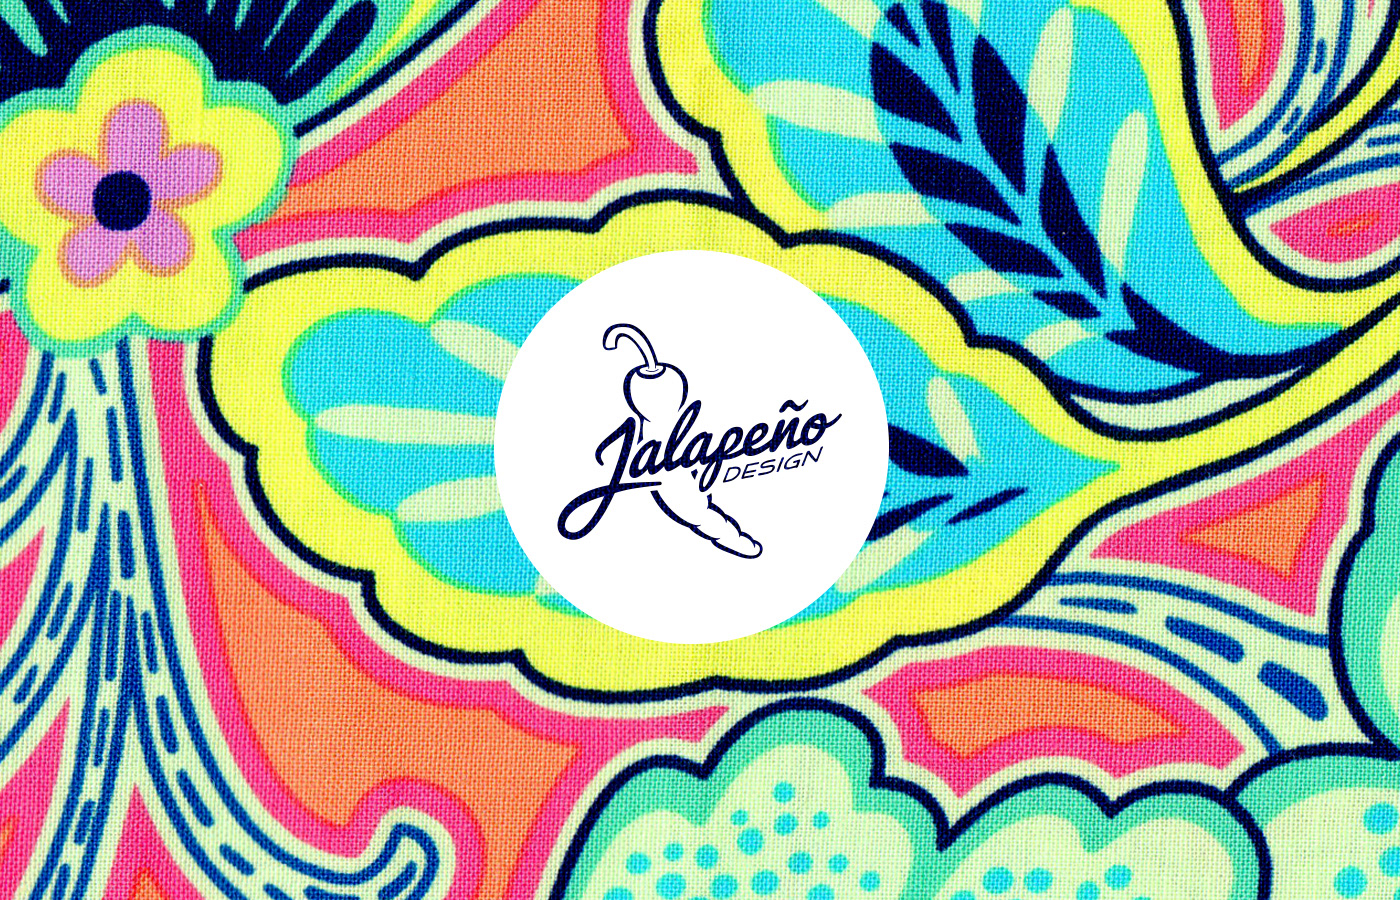 jalapeno design logo marca institucional Logotype Logotipo sistema identity muebles furniture banquito brand identidad